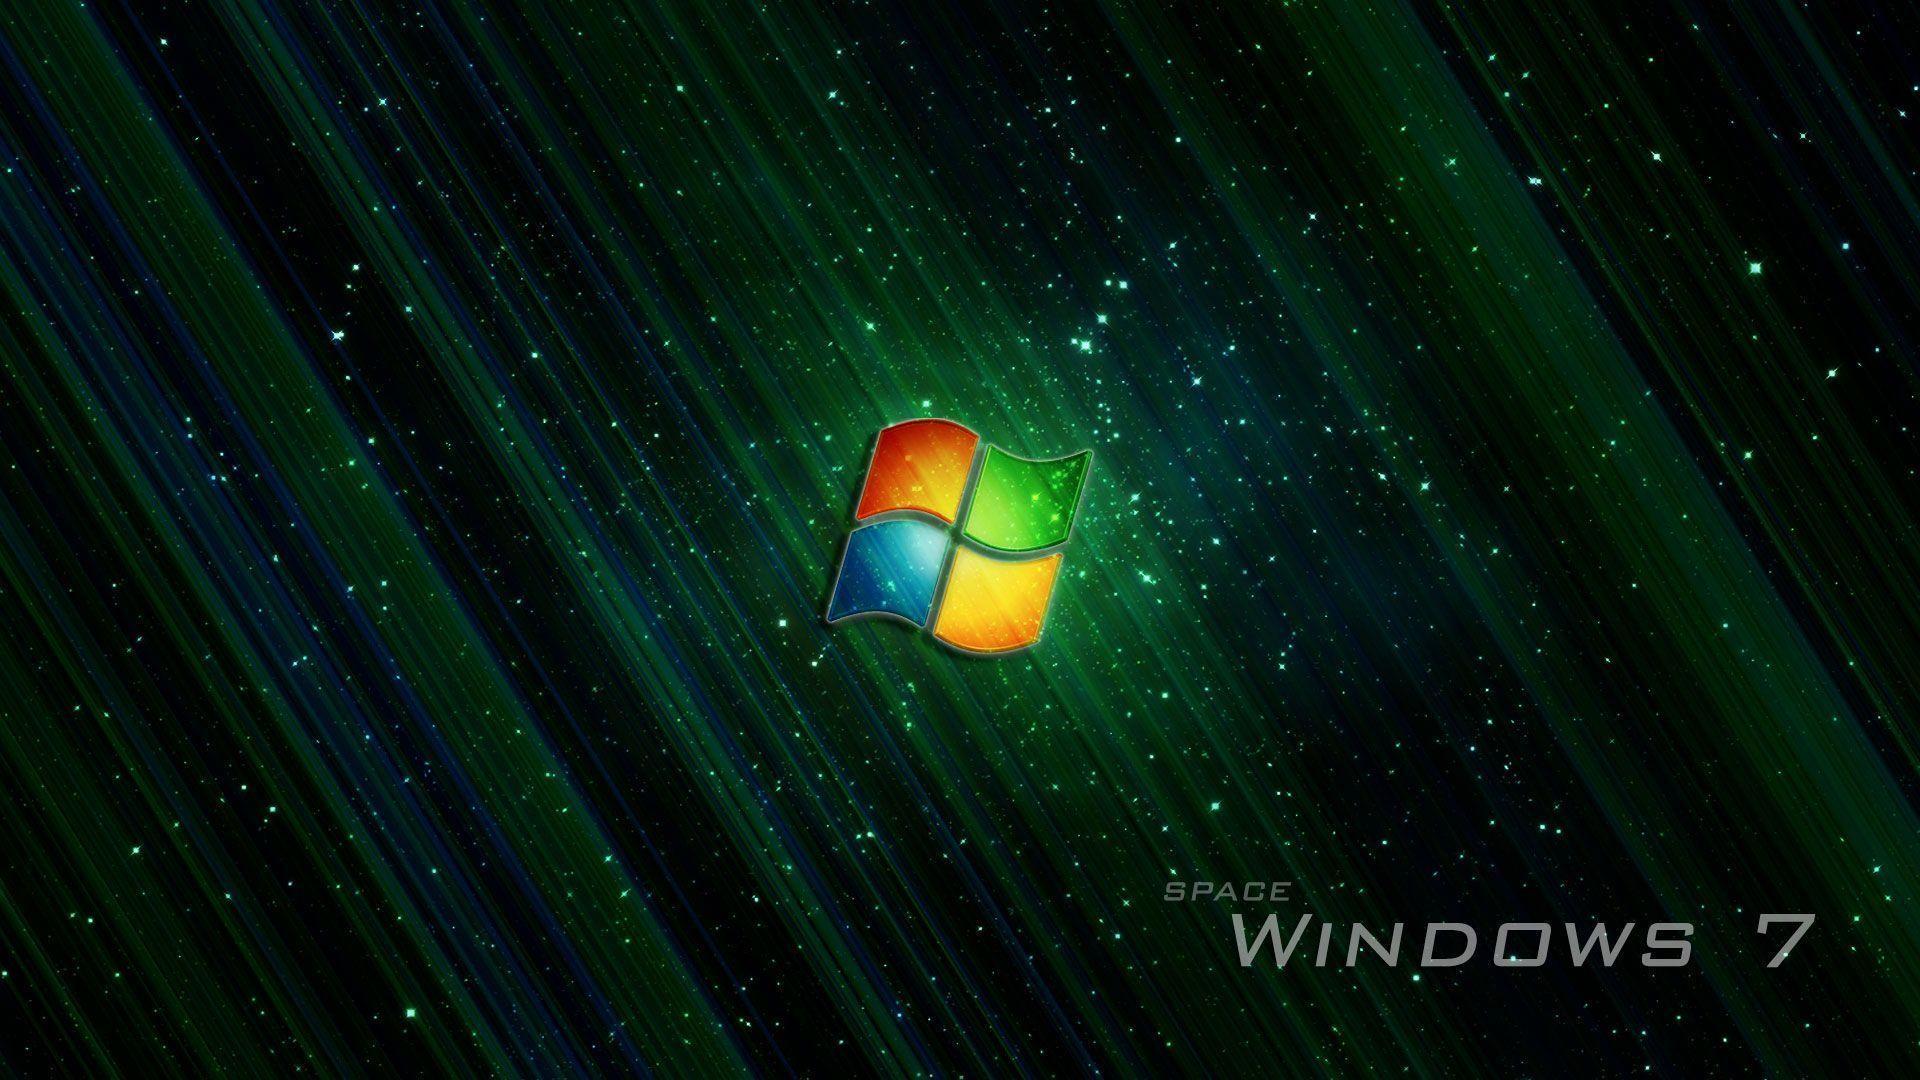 Windows 7 Wallpaper HD Free Download Wallpaper. AbstractWallpaperHD